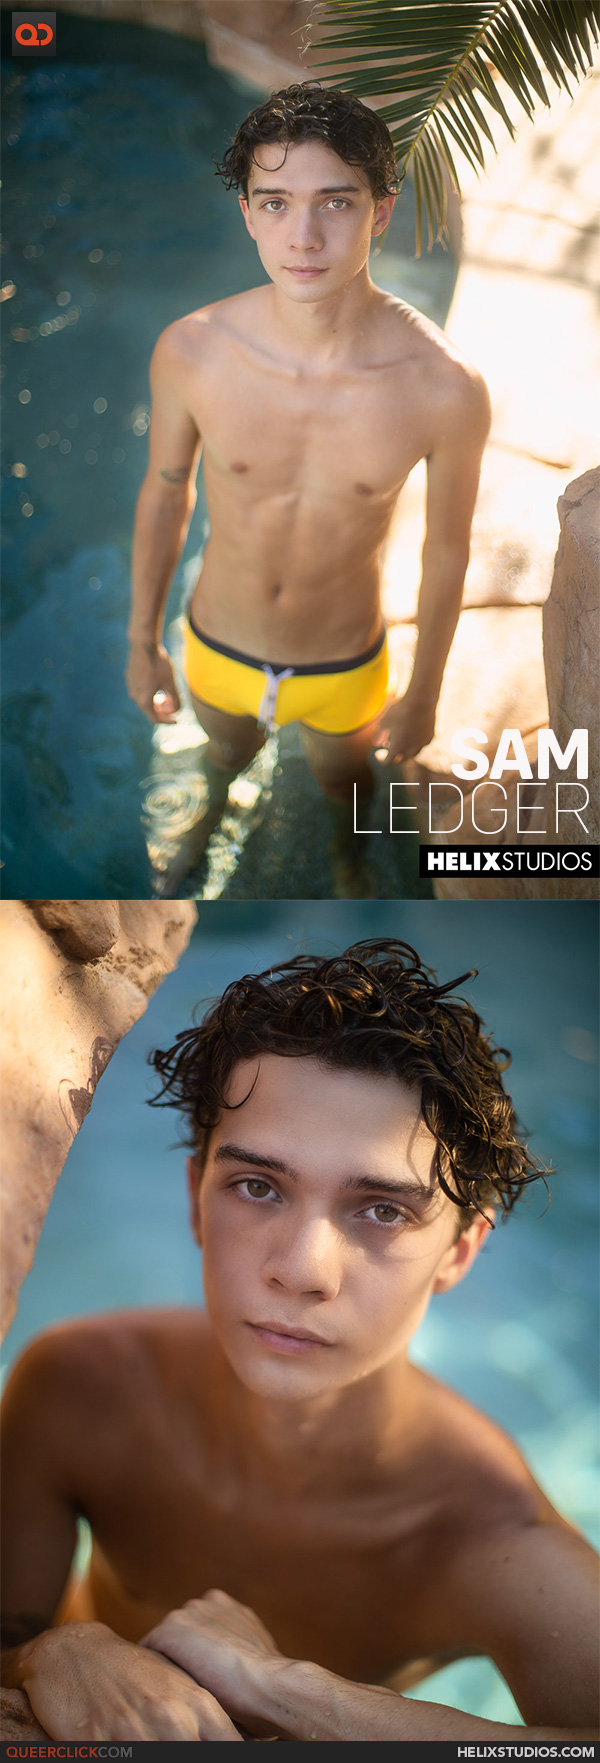 Helix Studios: Sam Ledger - Solo Session